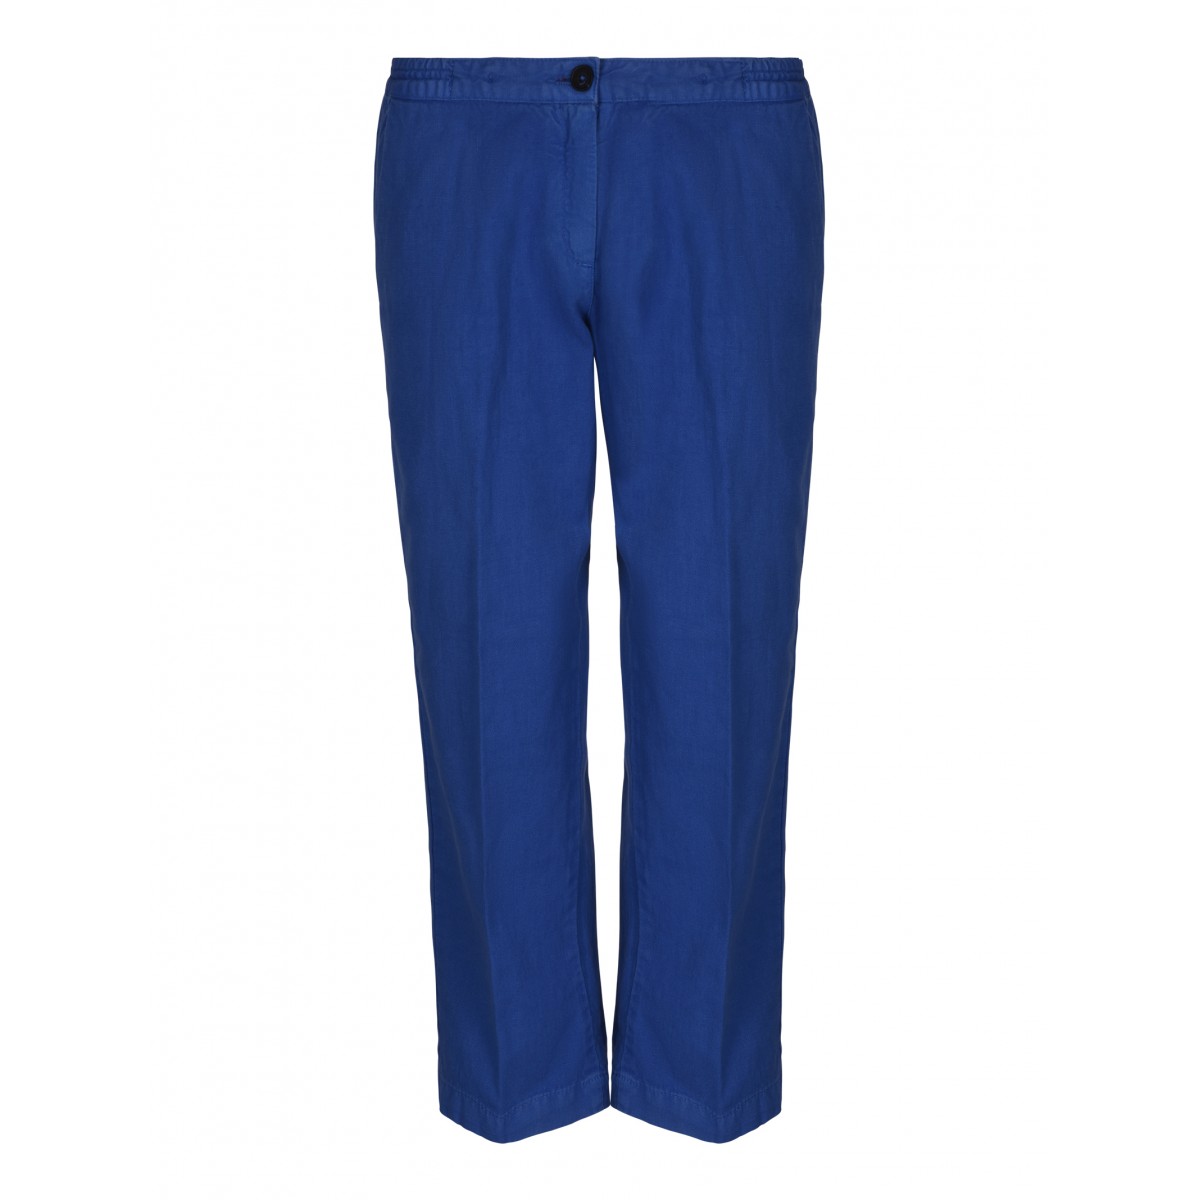 Blue Cotton and Linen Chino Pants